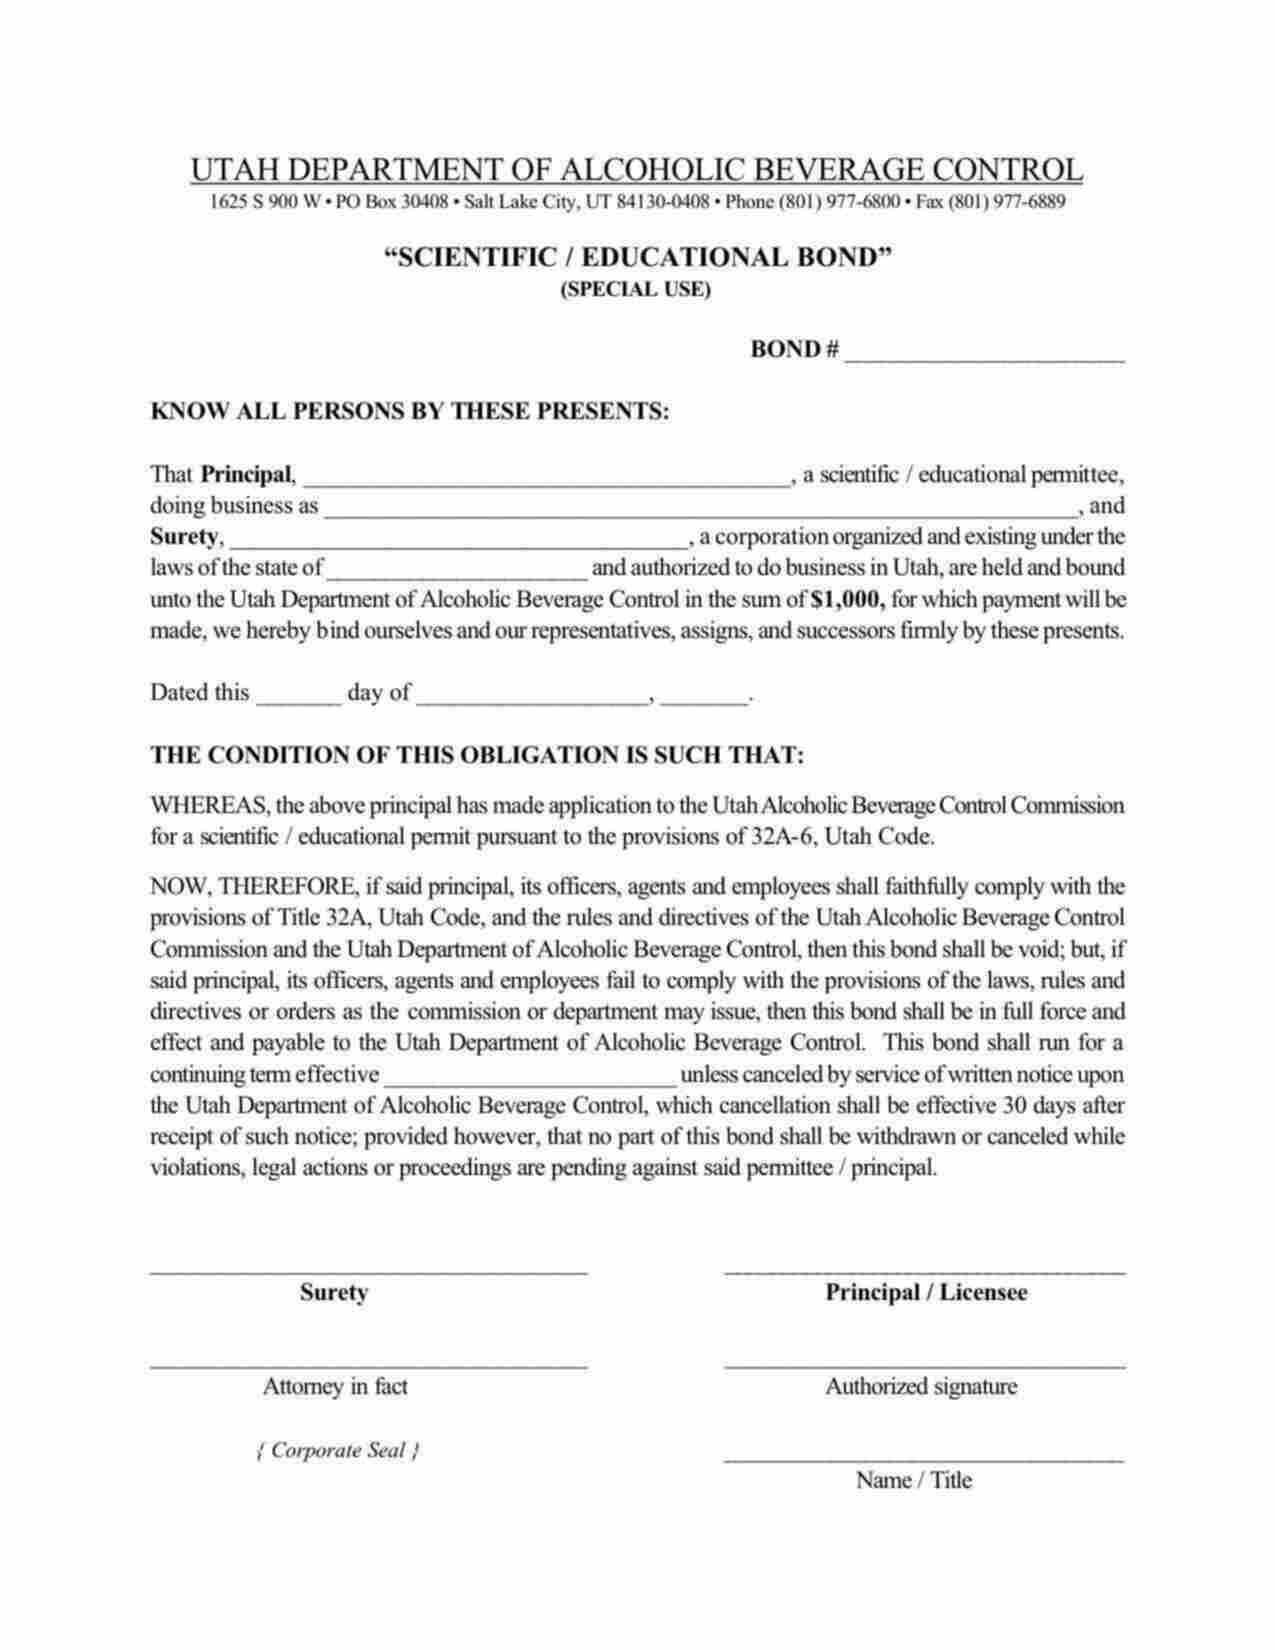 Utah Scientific / Educational (Special Use) Bond Form